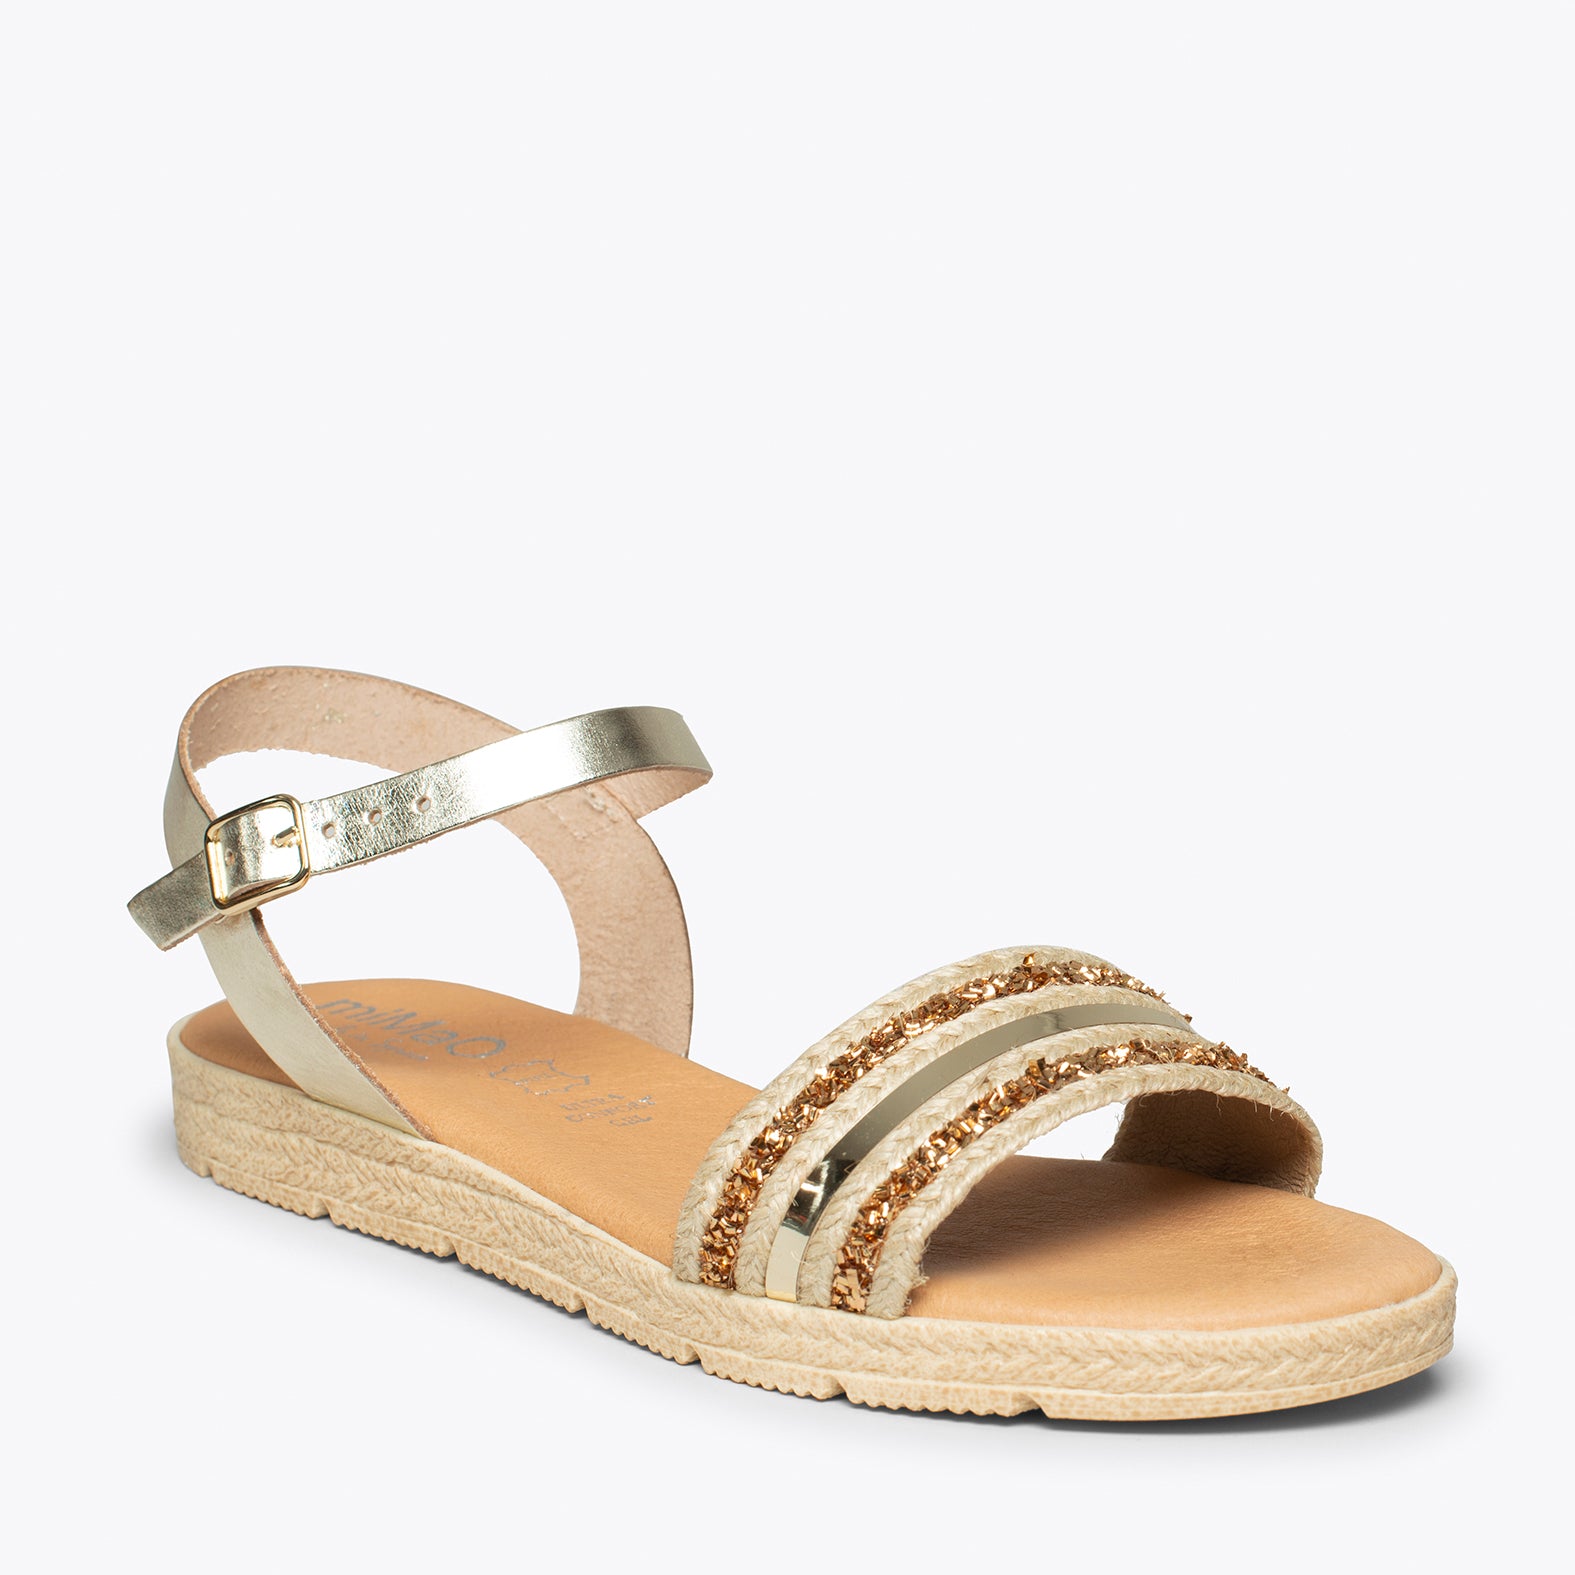 STAR – GOLD Animal print sandal with strap